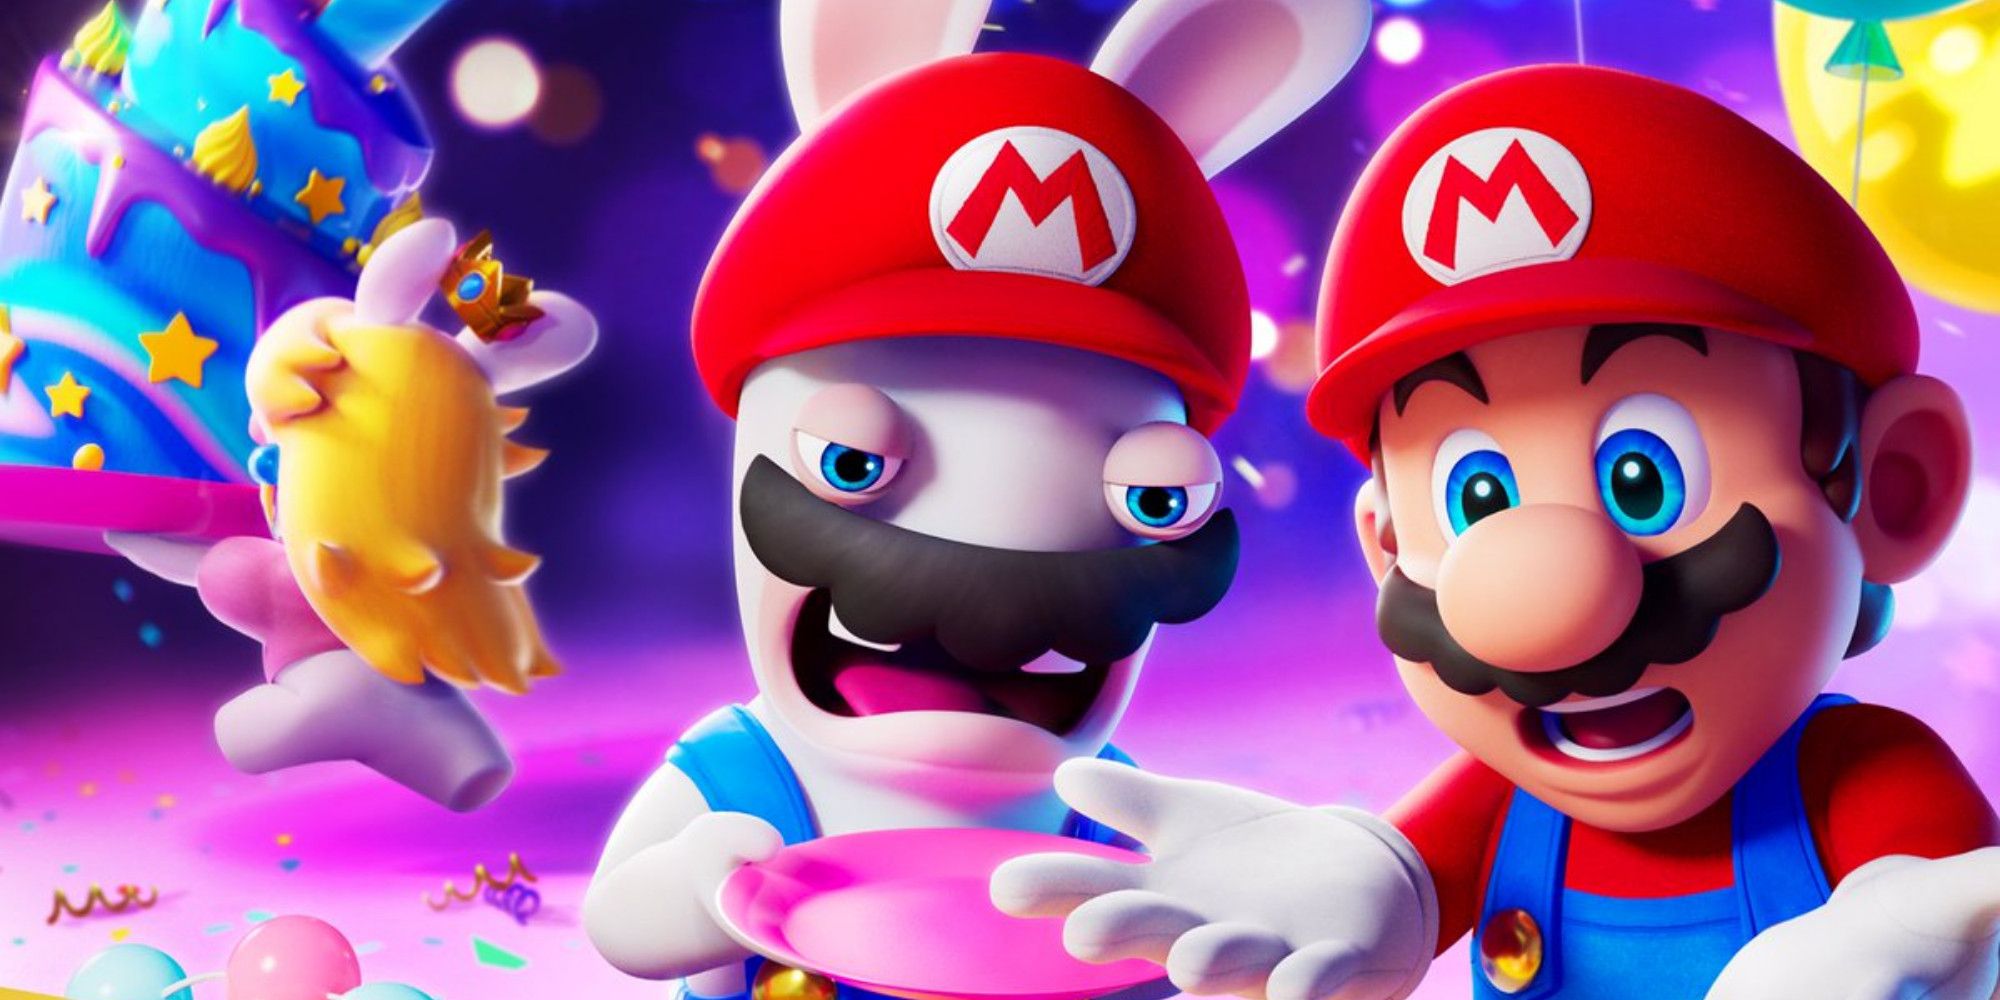 Mario and Rabbid dressed as Mario